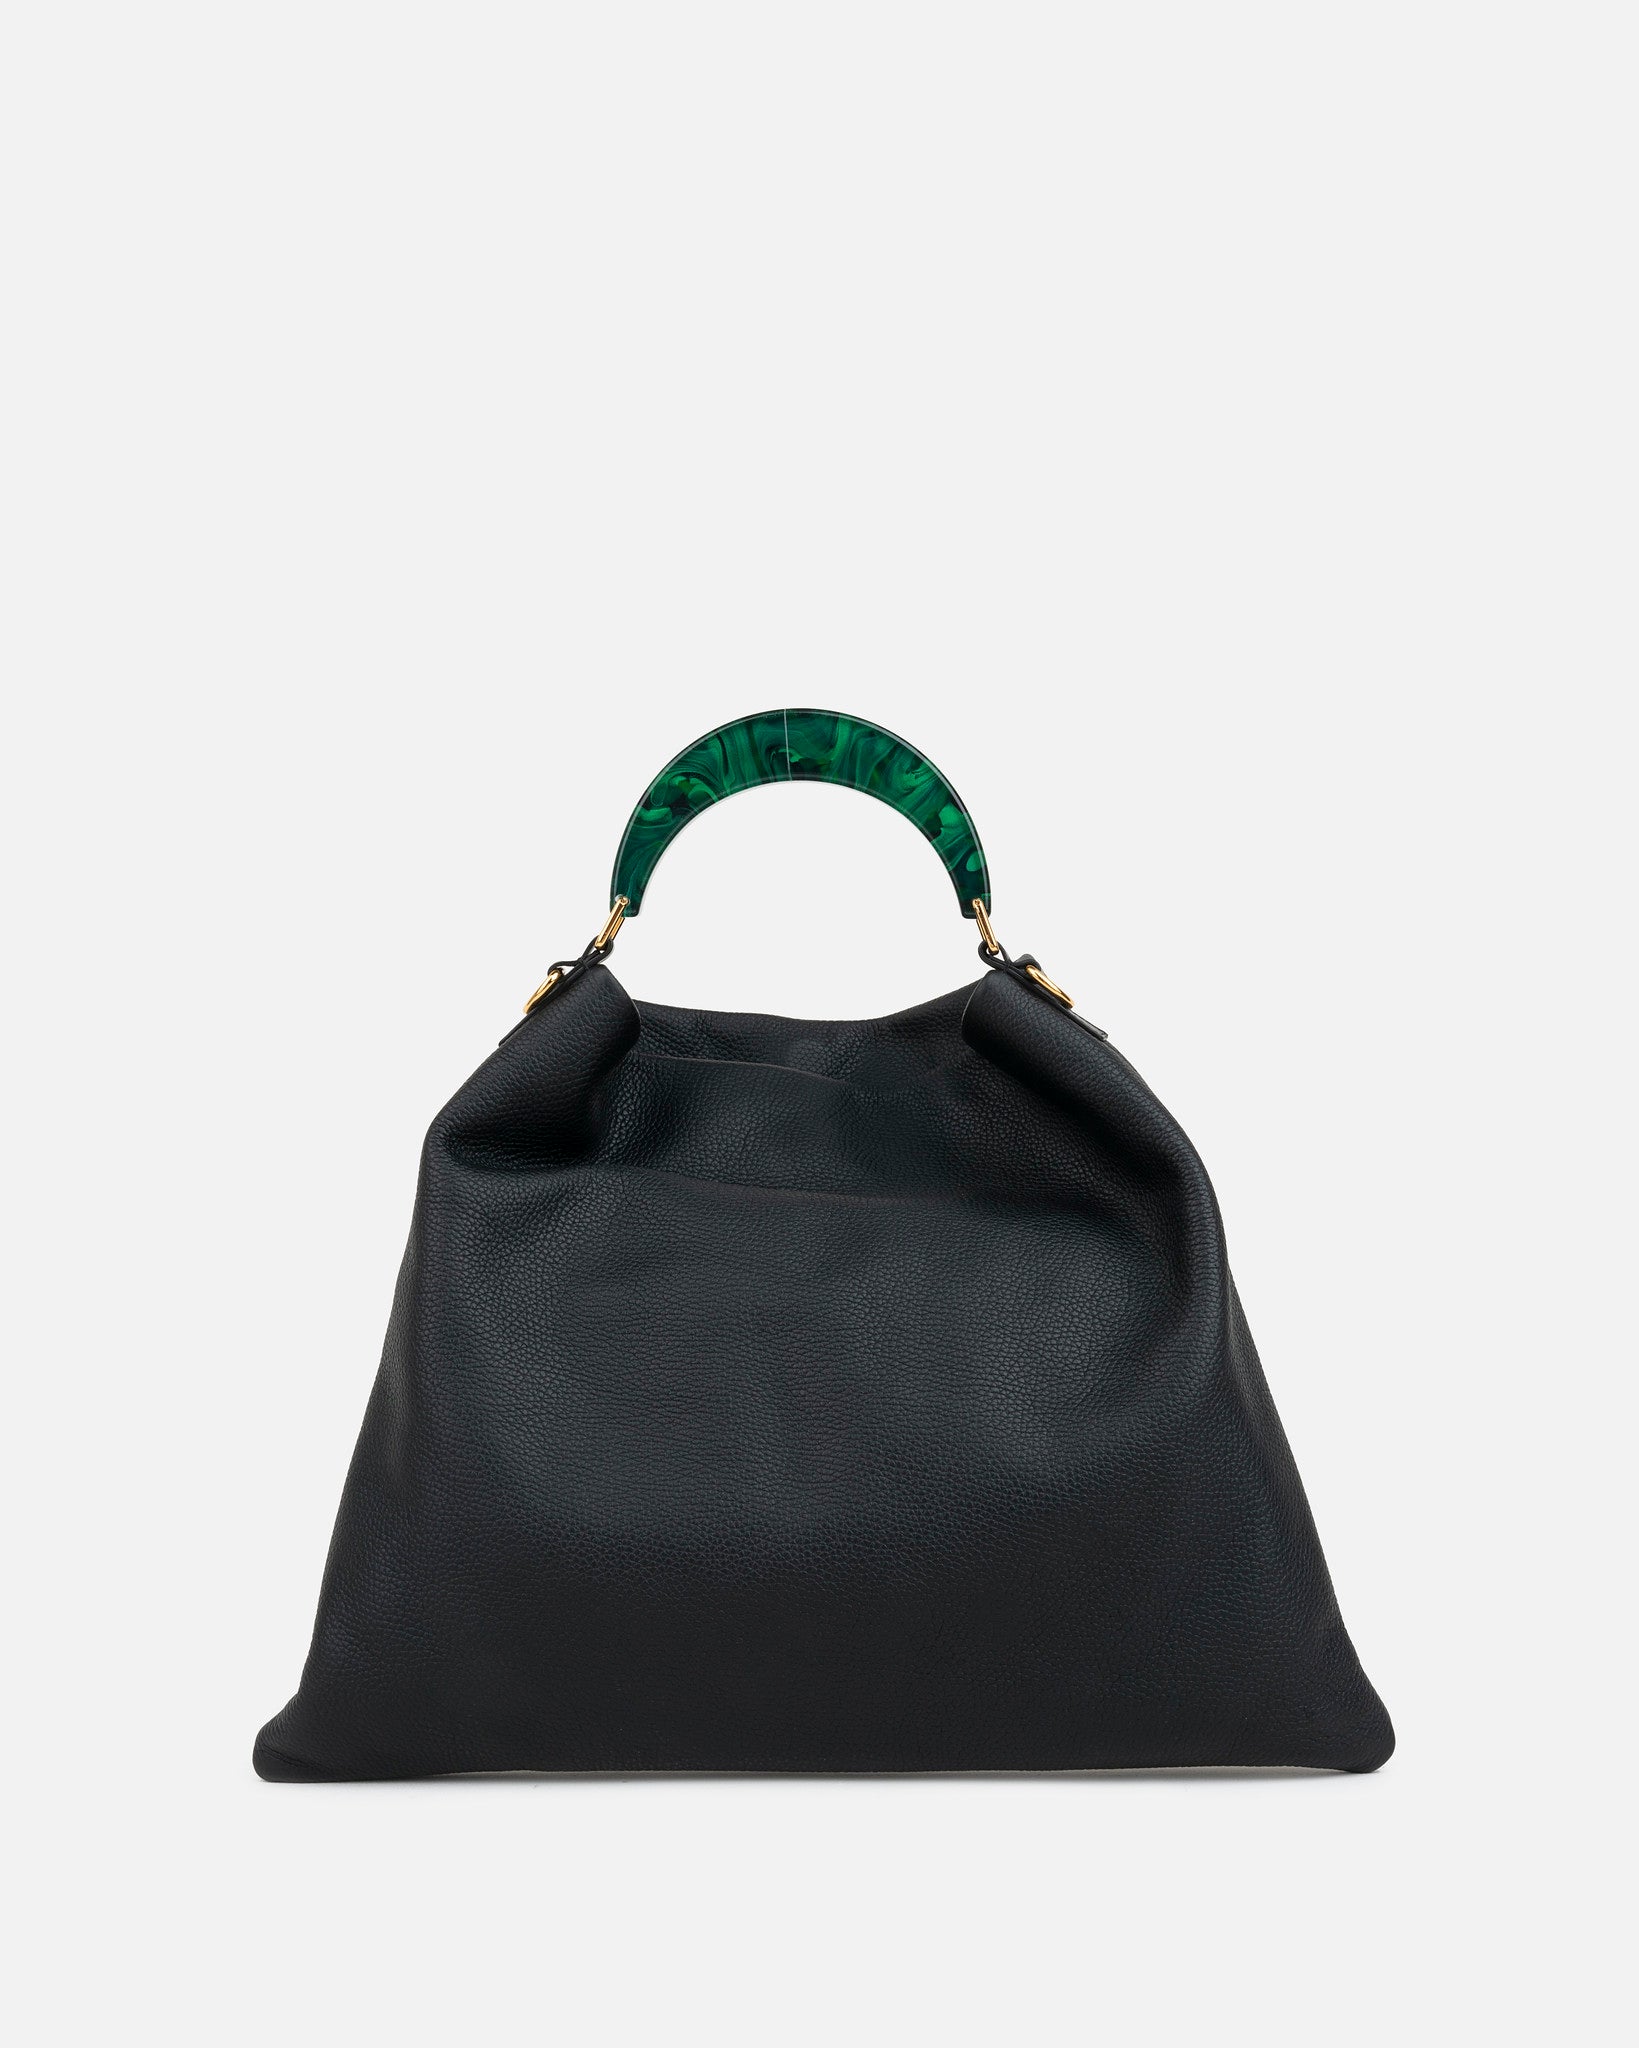 Marni Women Bags Venice Medium Bag in Spherical Green